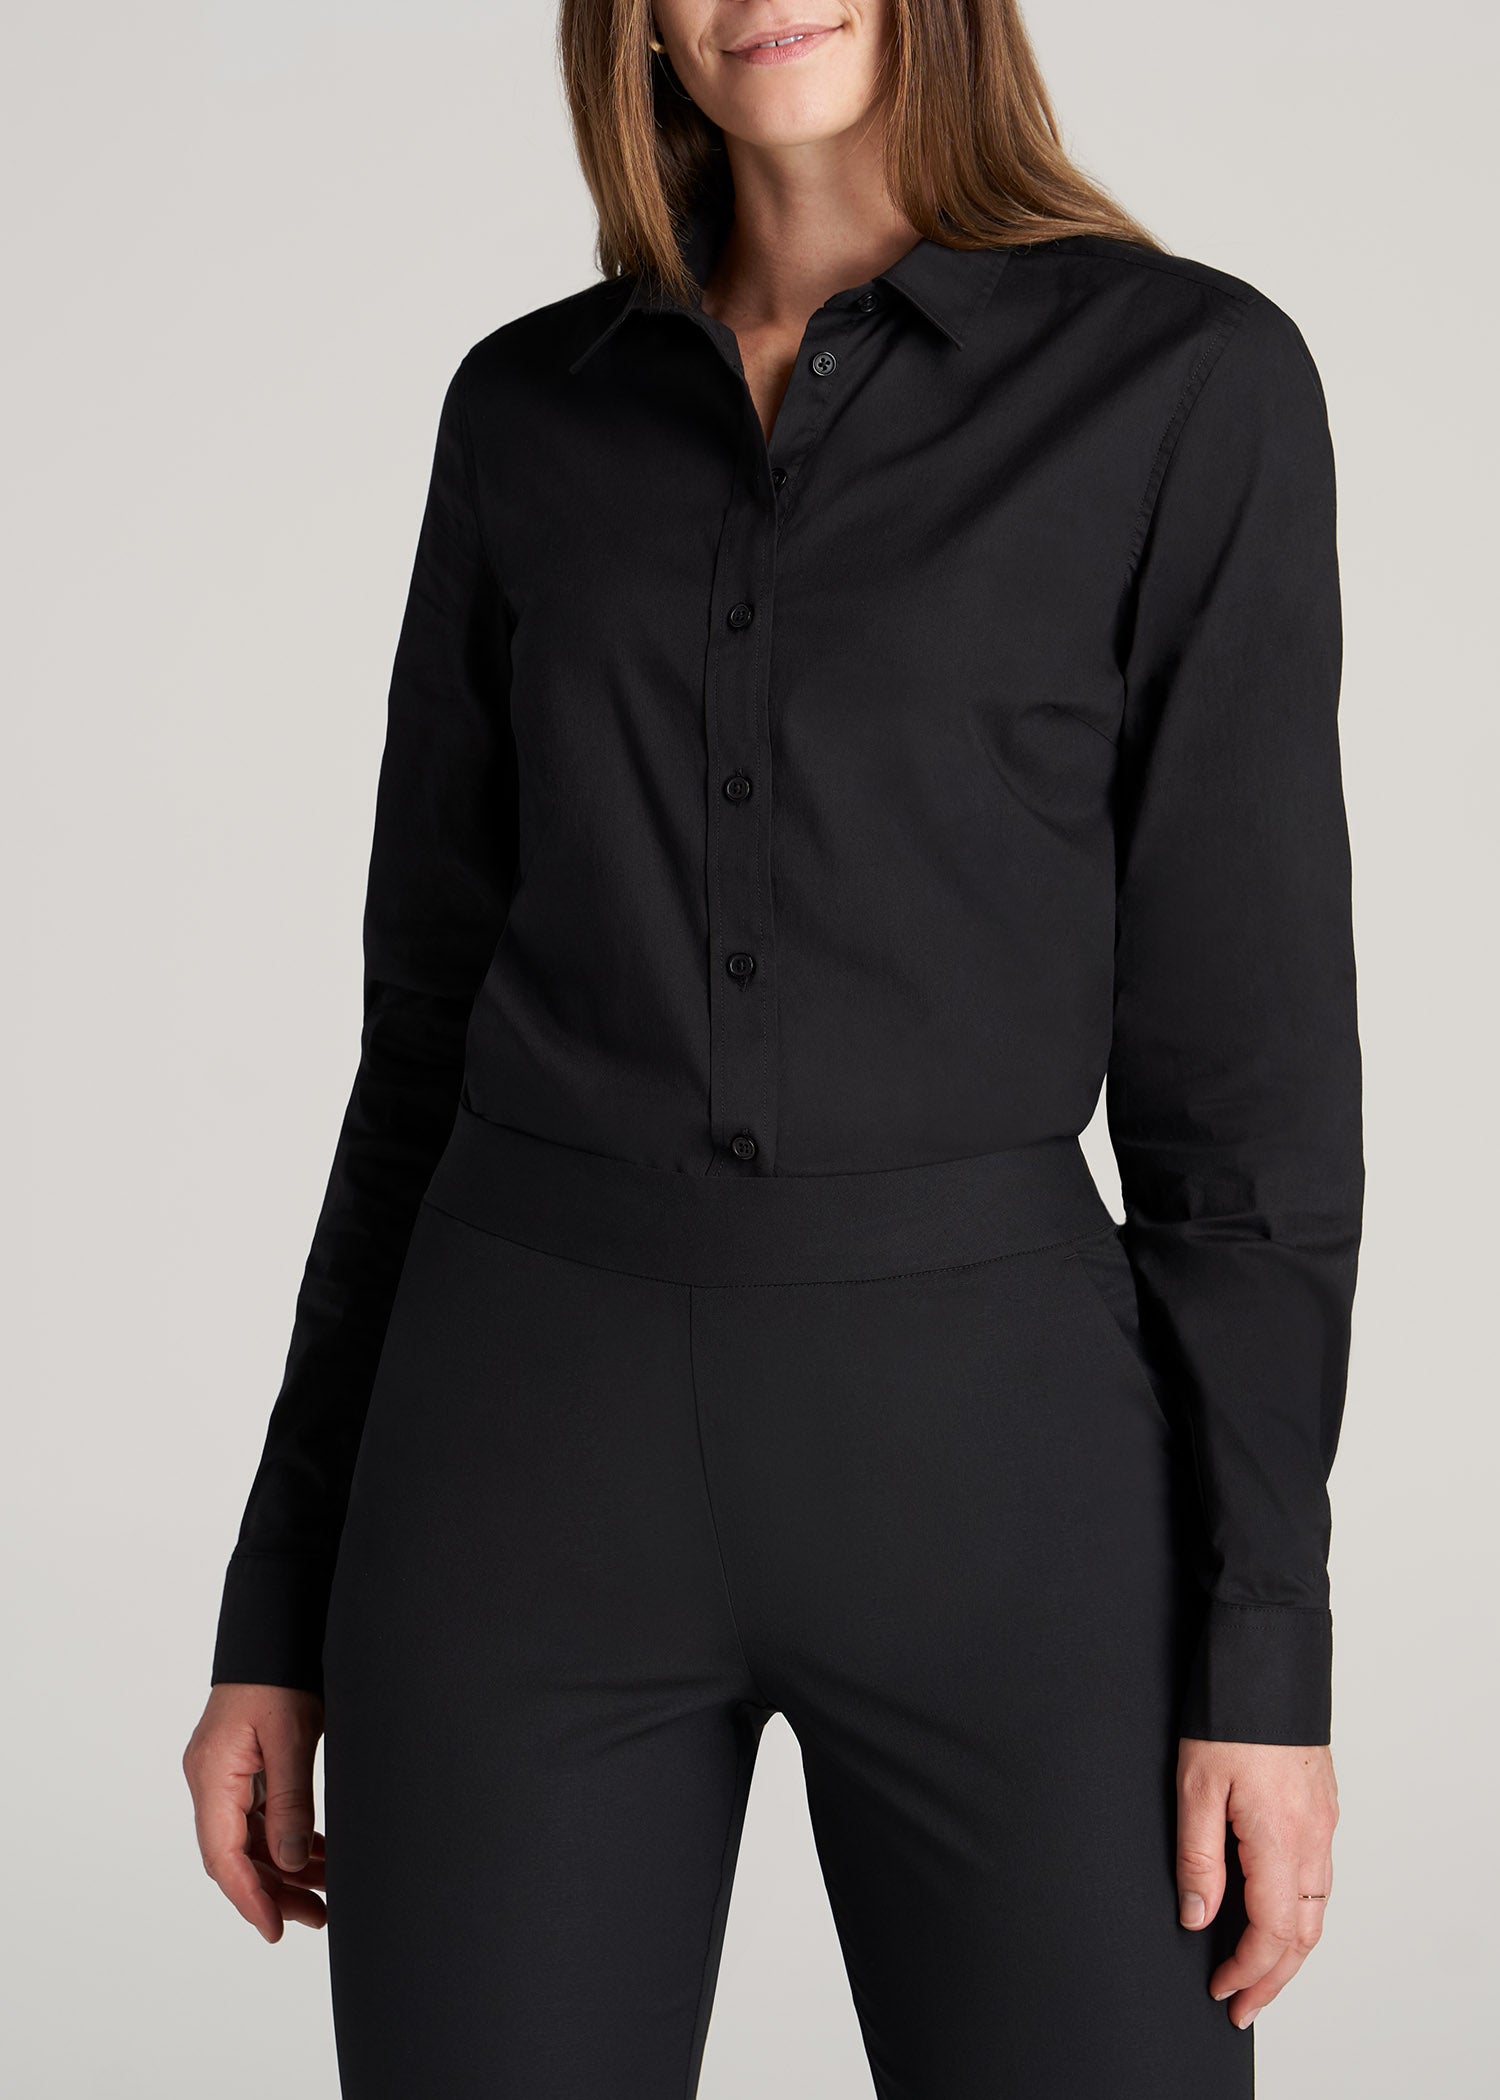 black shirt dress womens